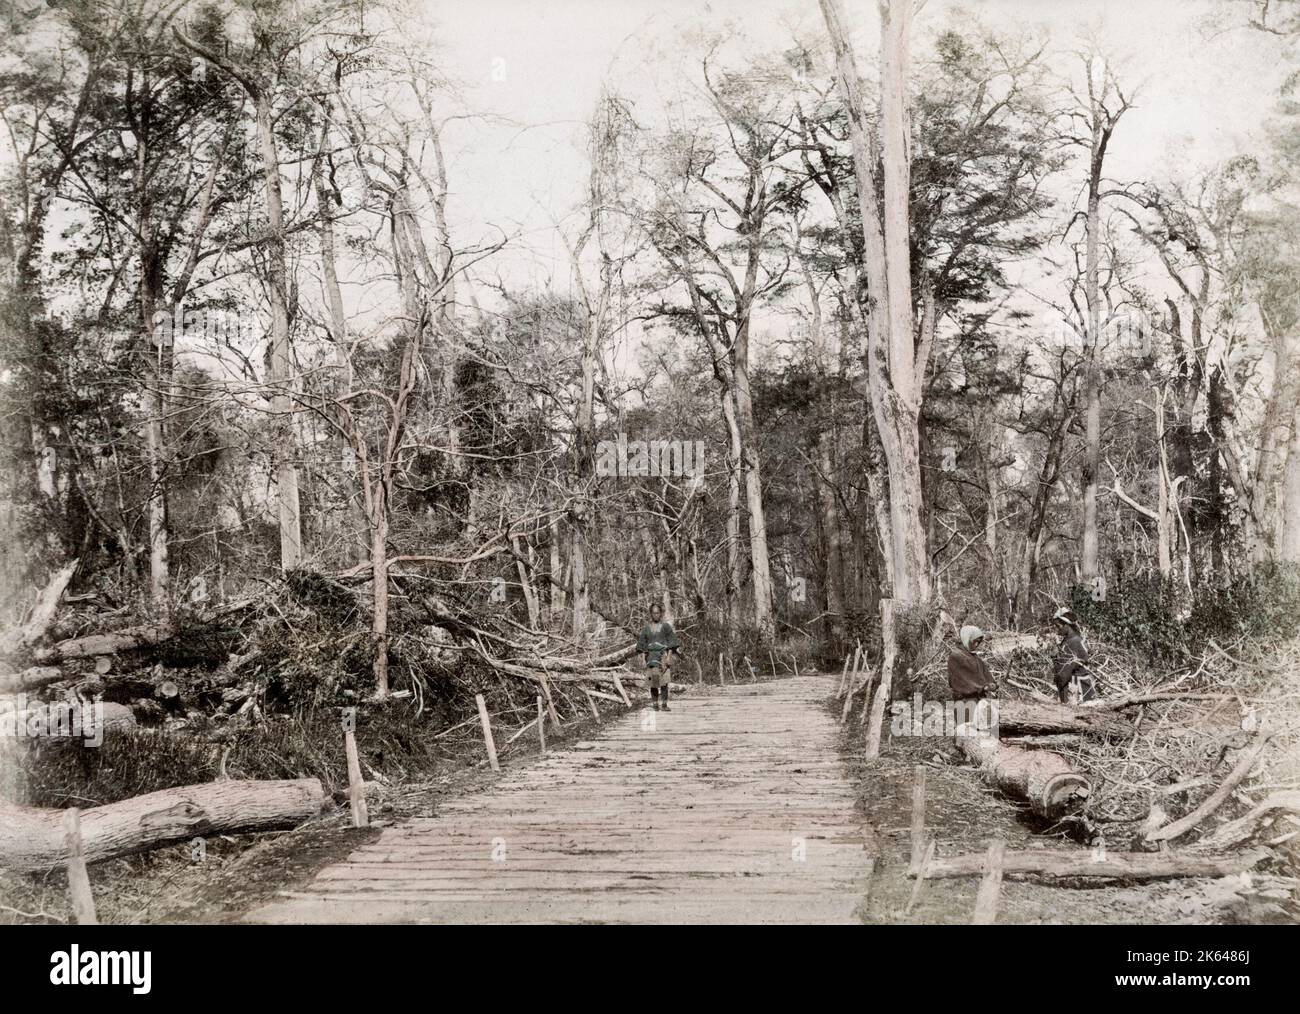 Vintage 19th century photograph - Japan - from the studio of Baron Raimund von Stillfried. Fallen trees at Ninomiya, Kanagaw district, possibly the result of typhoon damage. Stock Photo